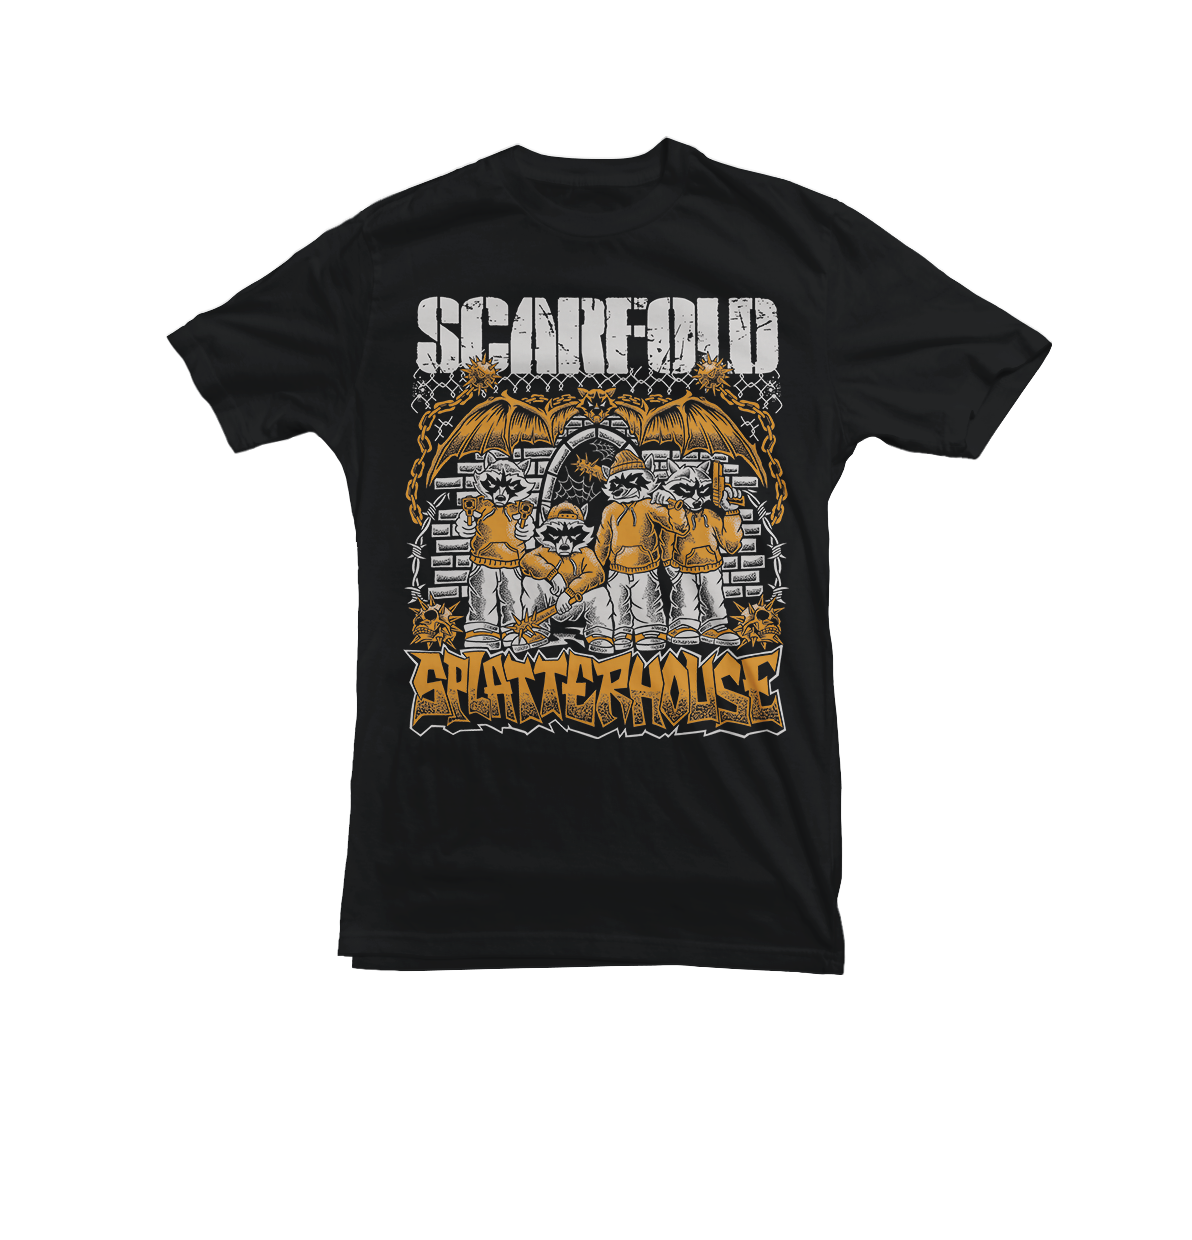 SCARFOLD - "Splatterhouse" Black T-Shirt